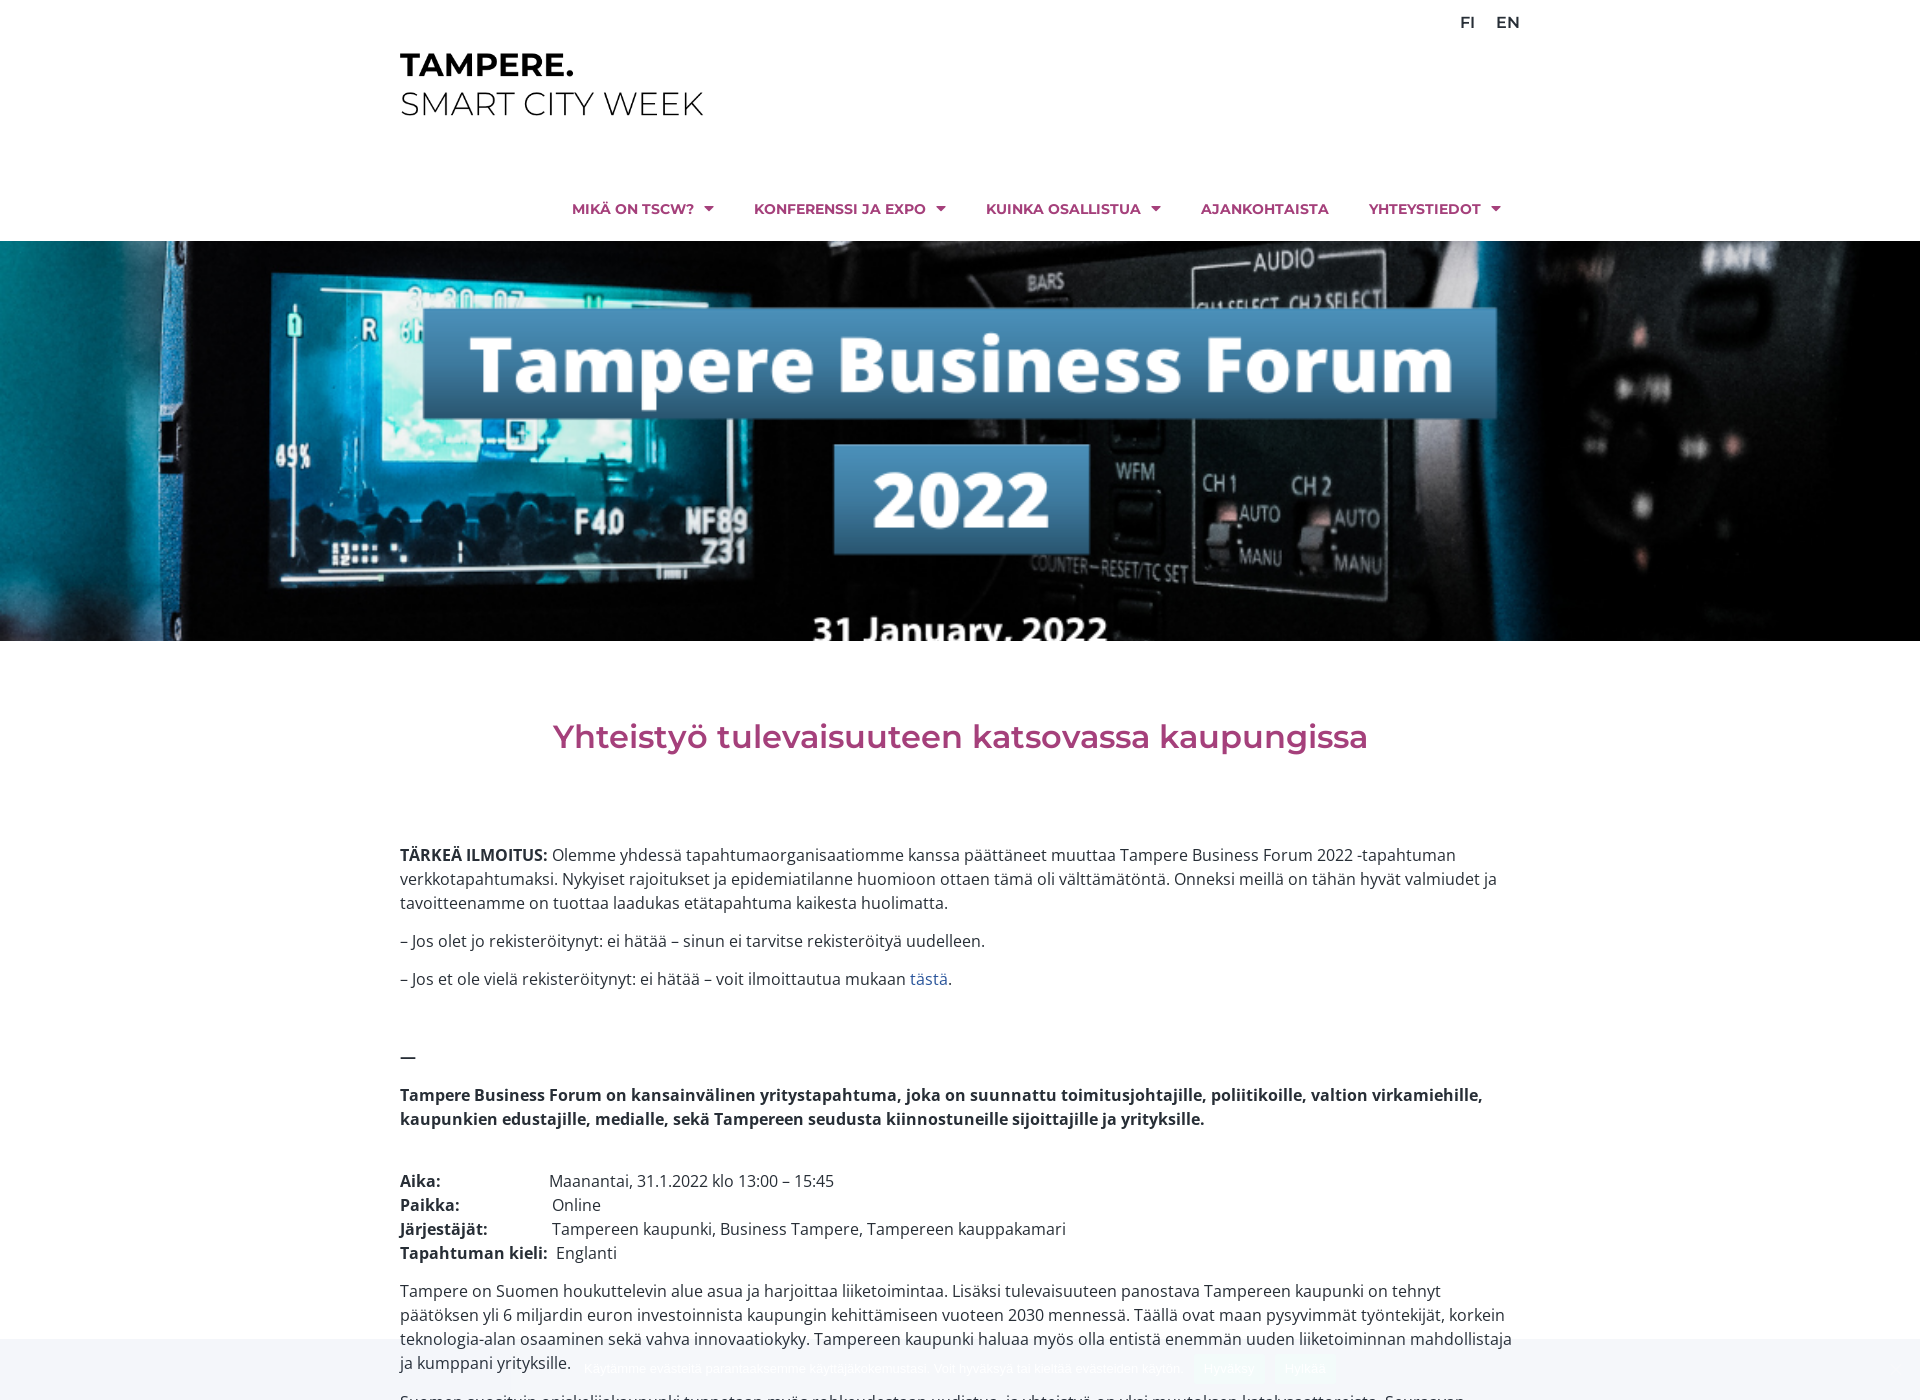 Näyttökuva tamperebusinessforum.fi